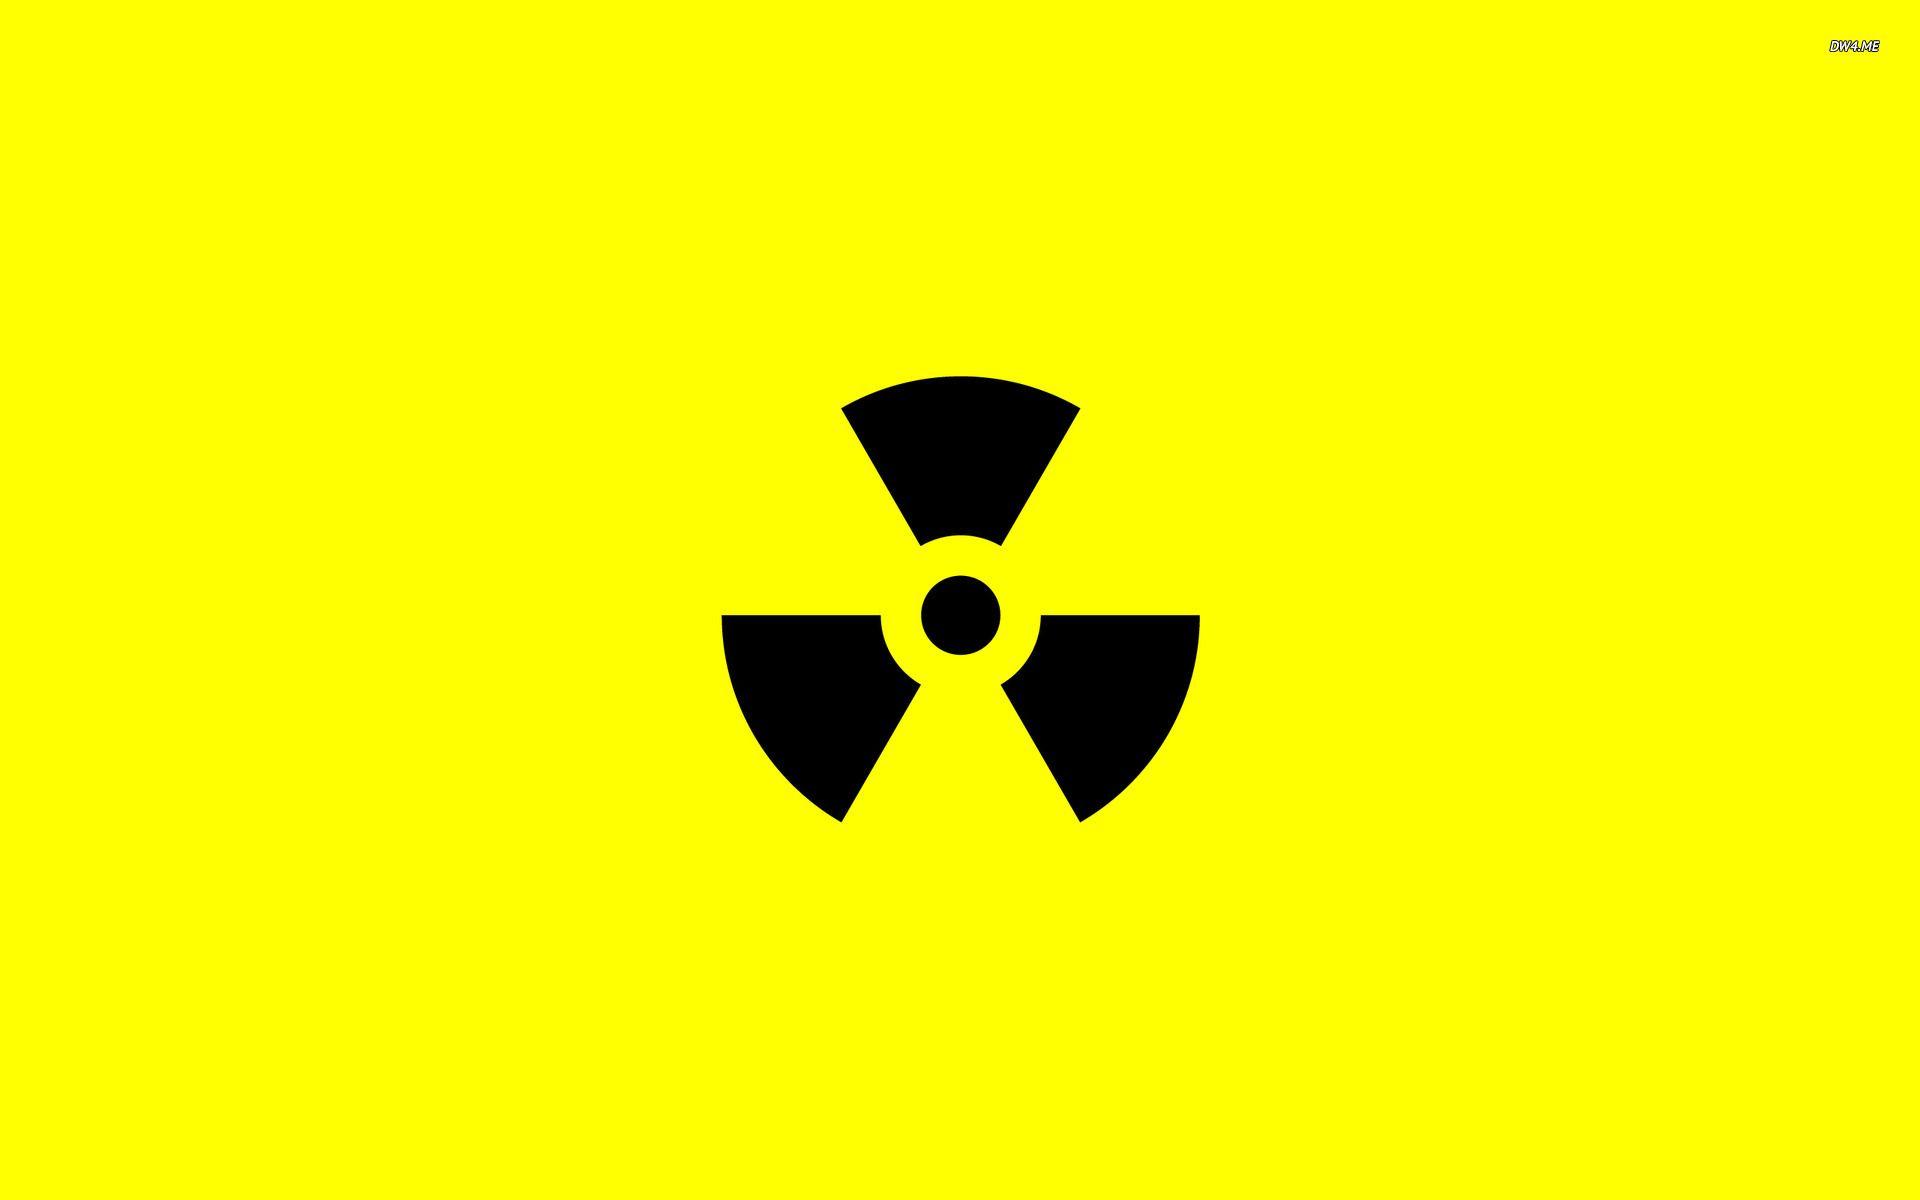 Radioactive Symbol Wallpaper